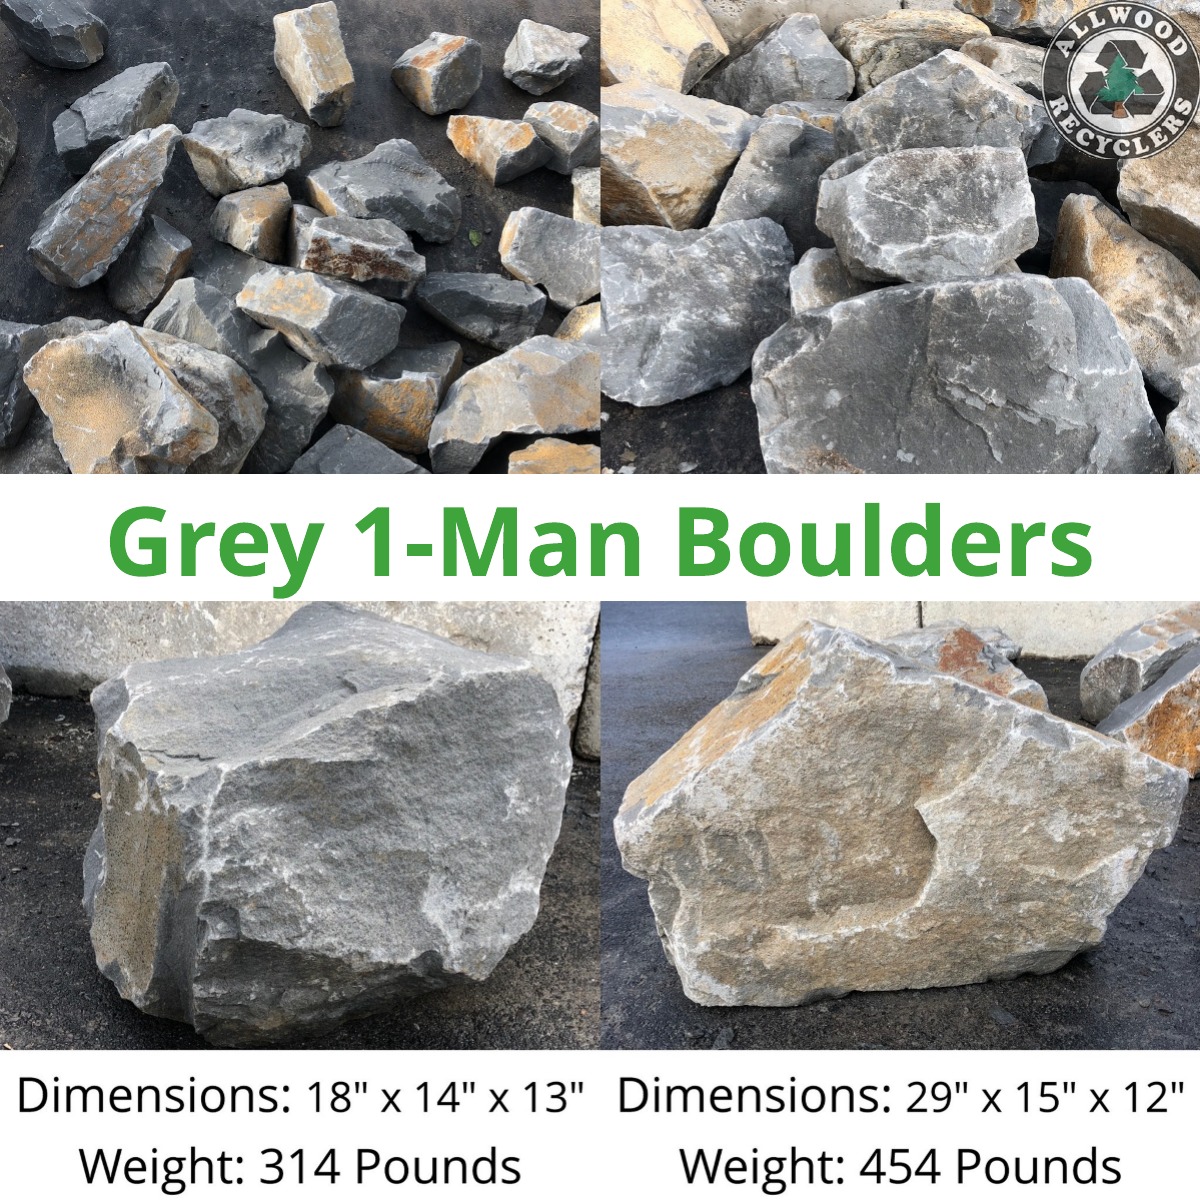 Grey 1-Man Boulders